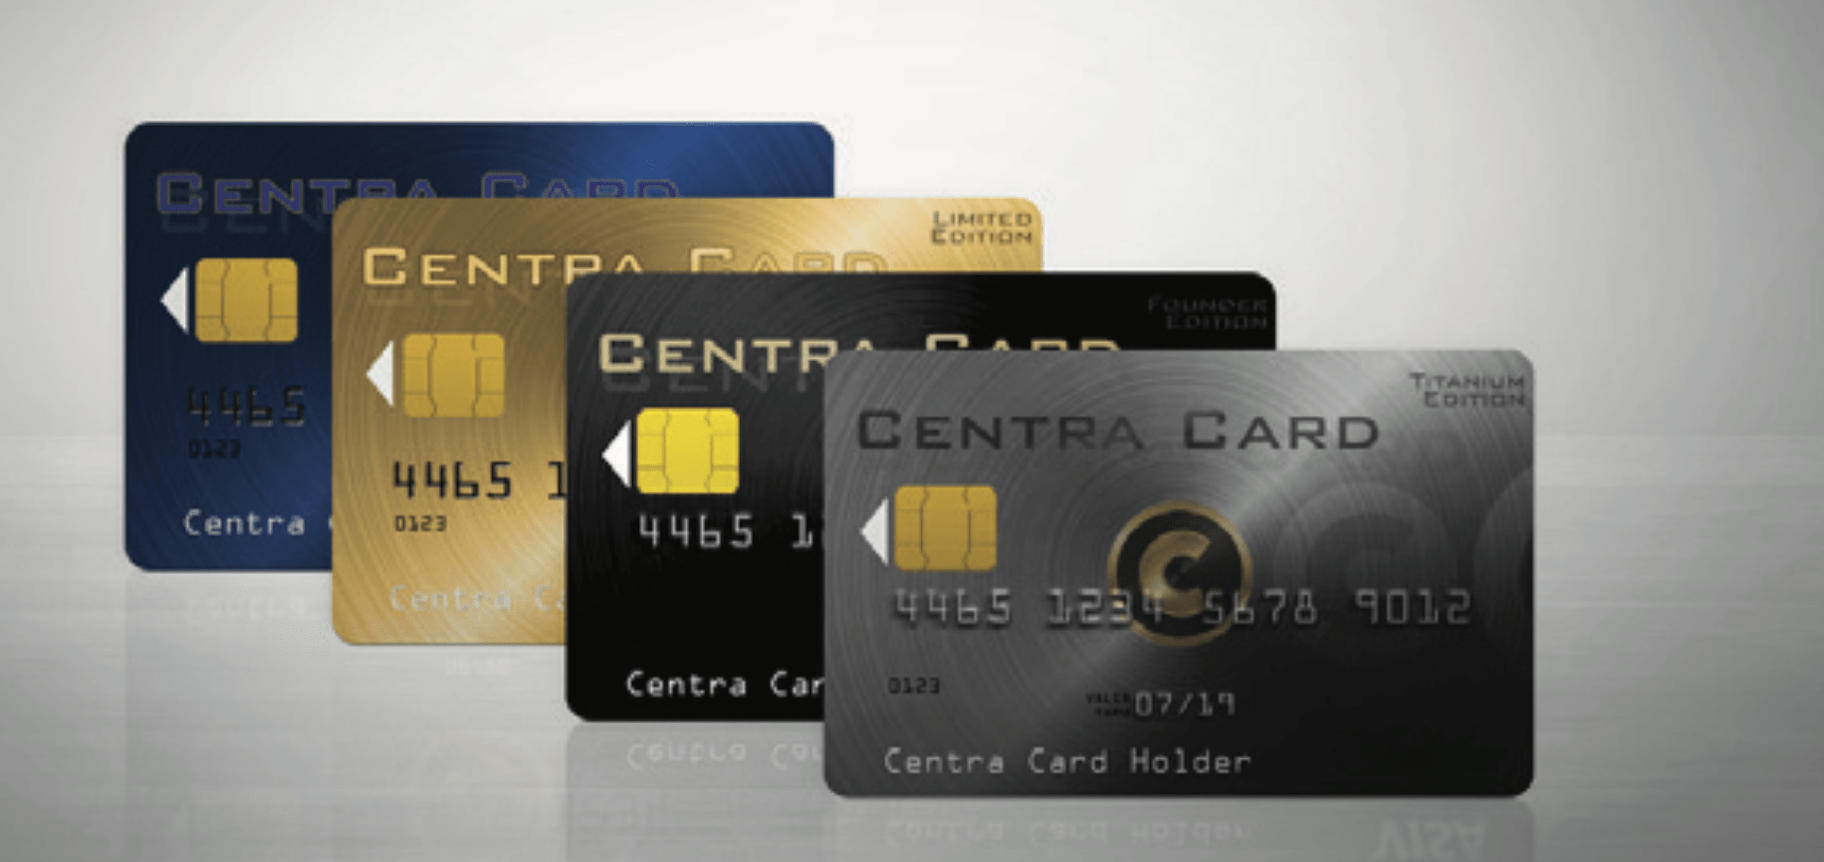 Centra card crypto ethereum usb wallet